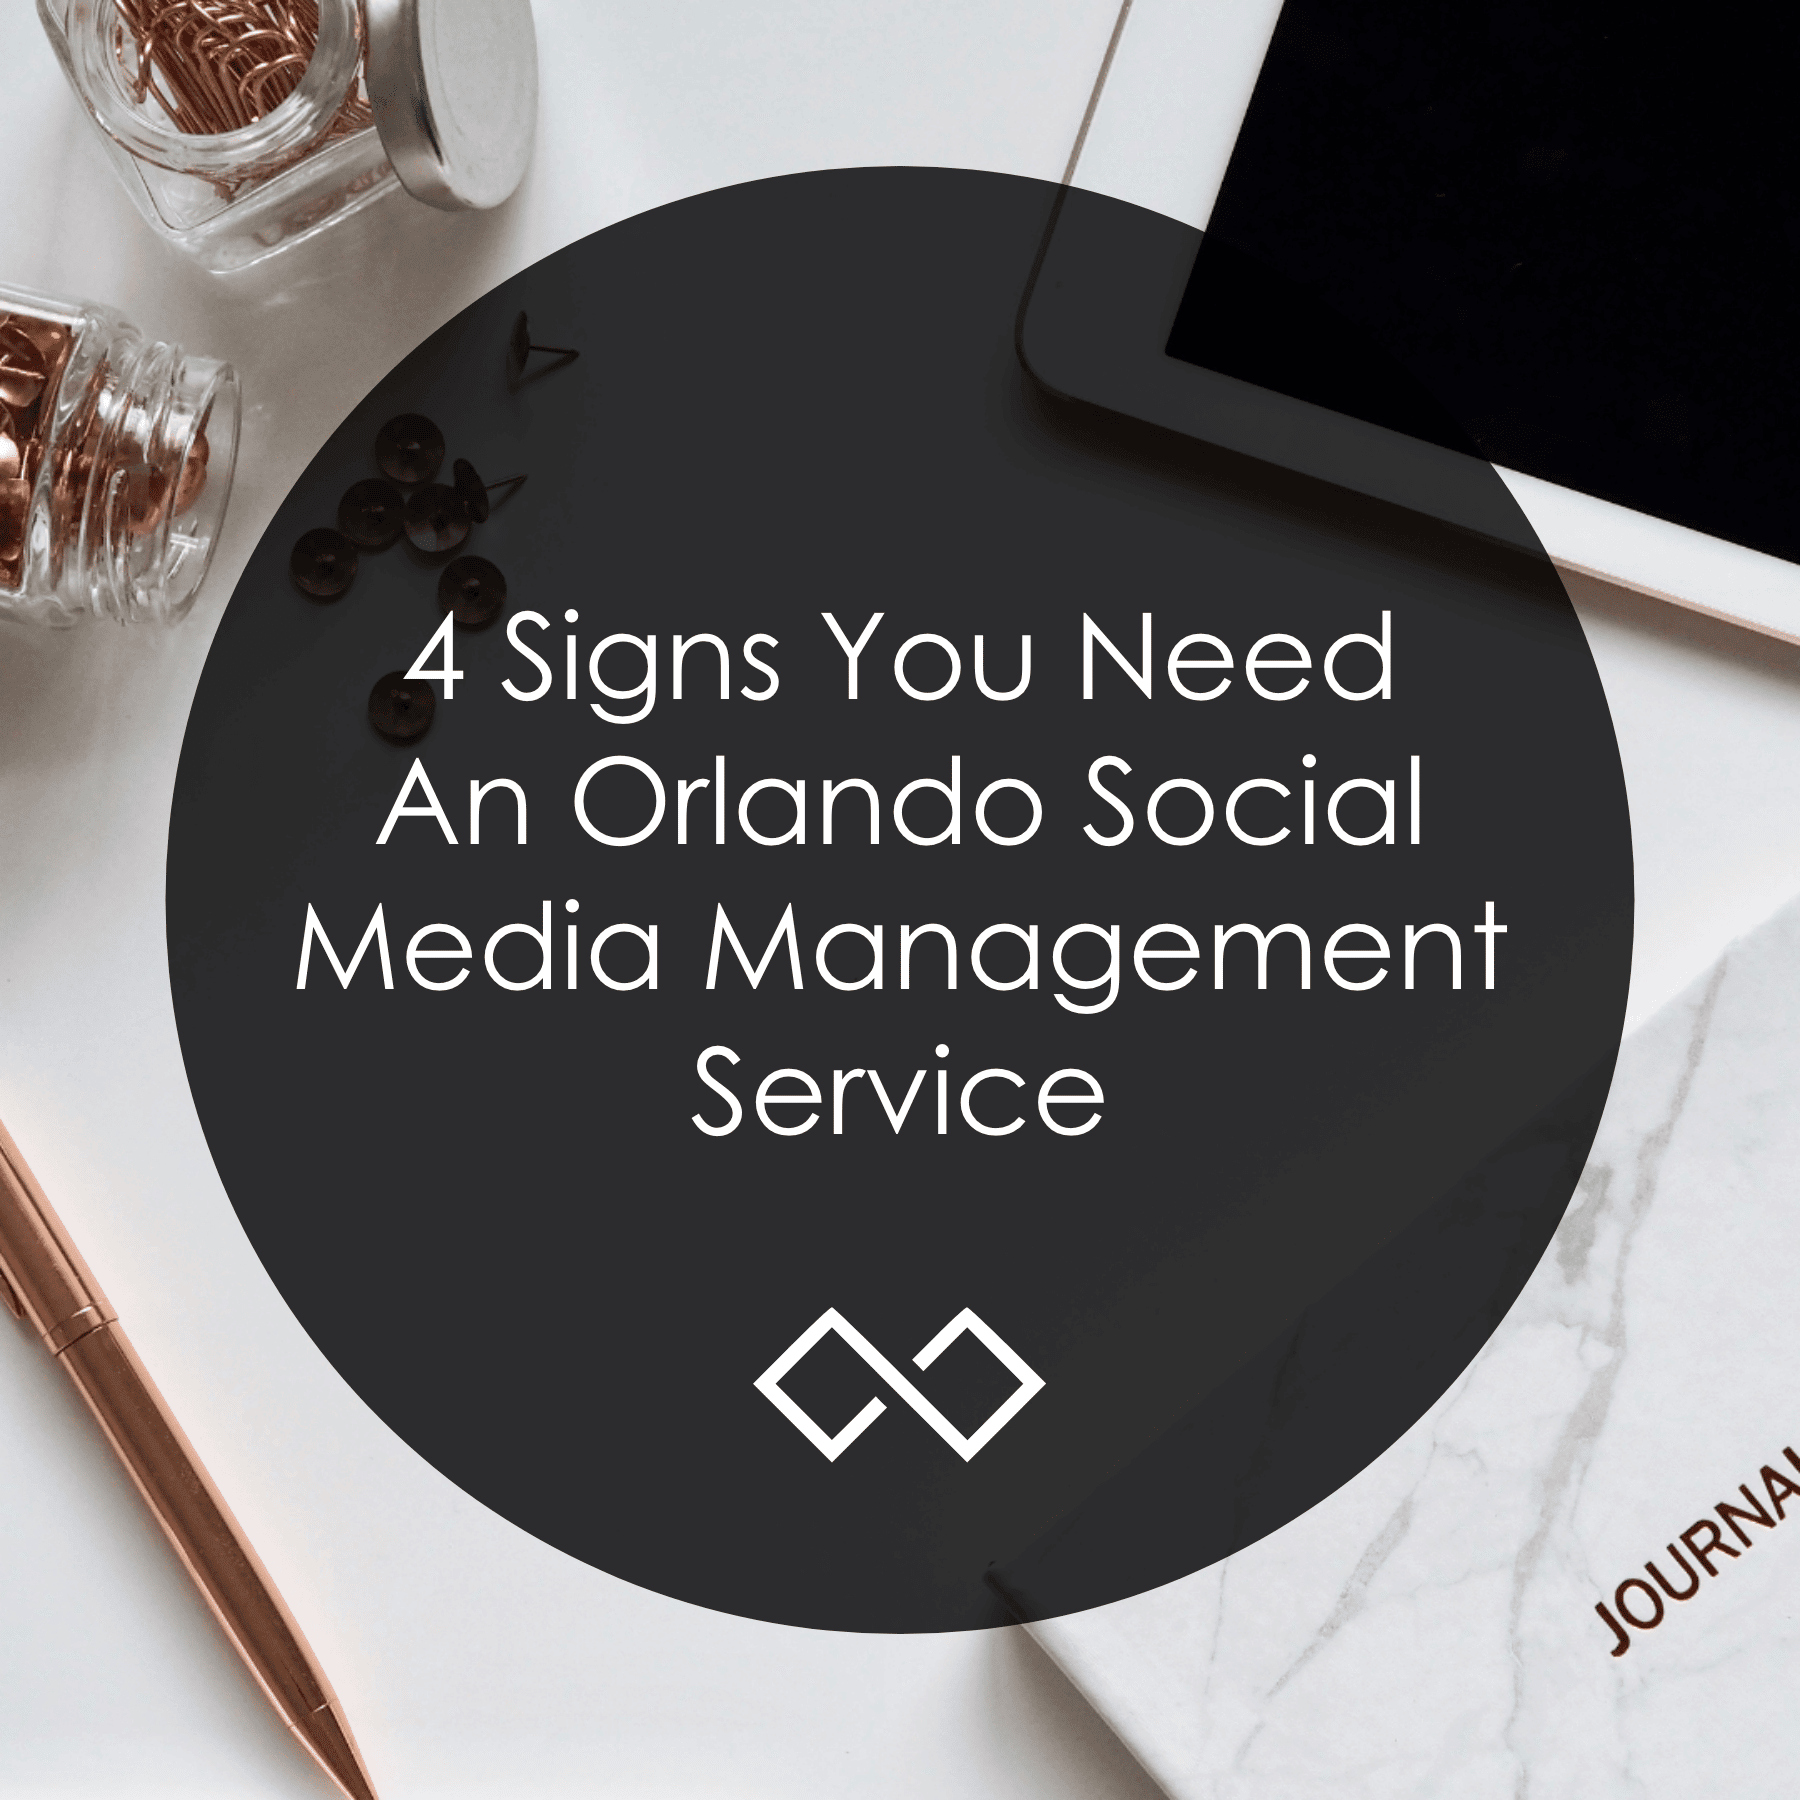 Orlando social media management service